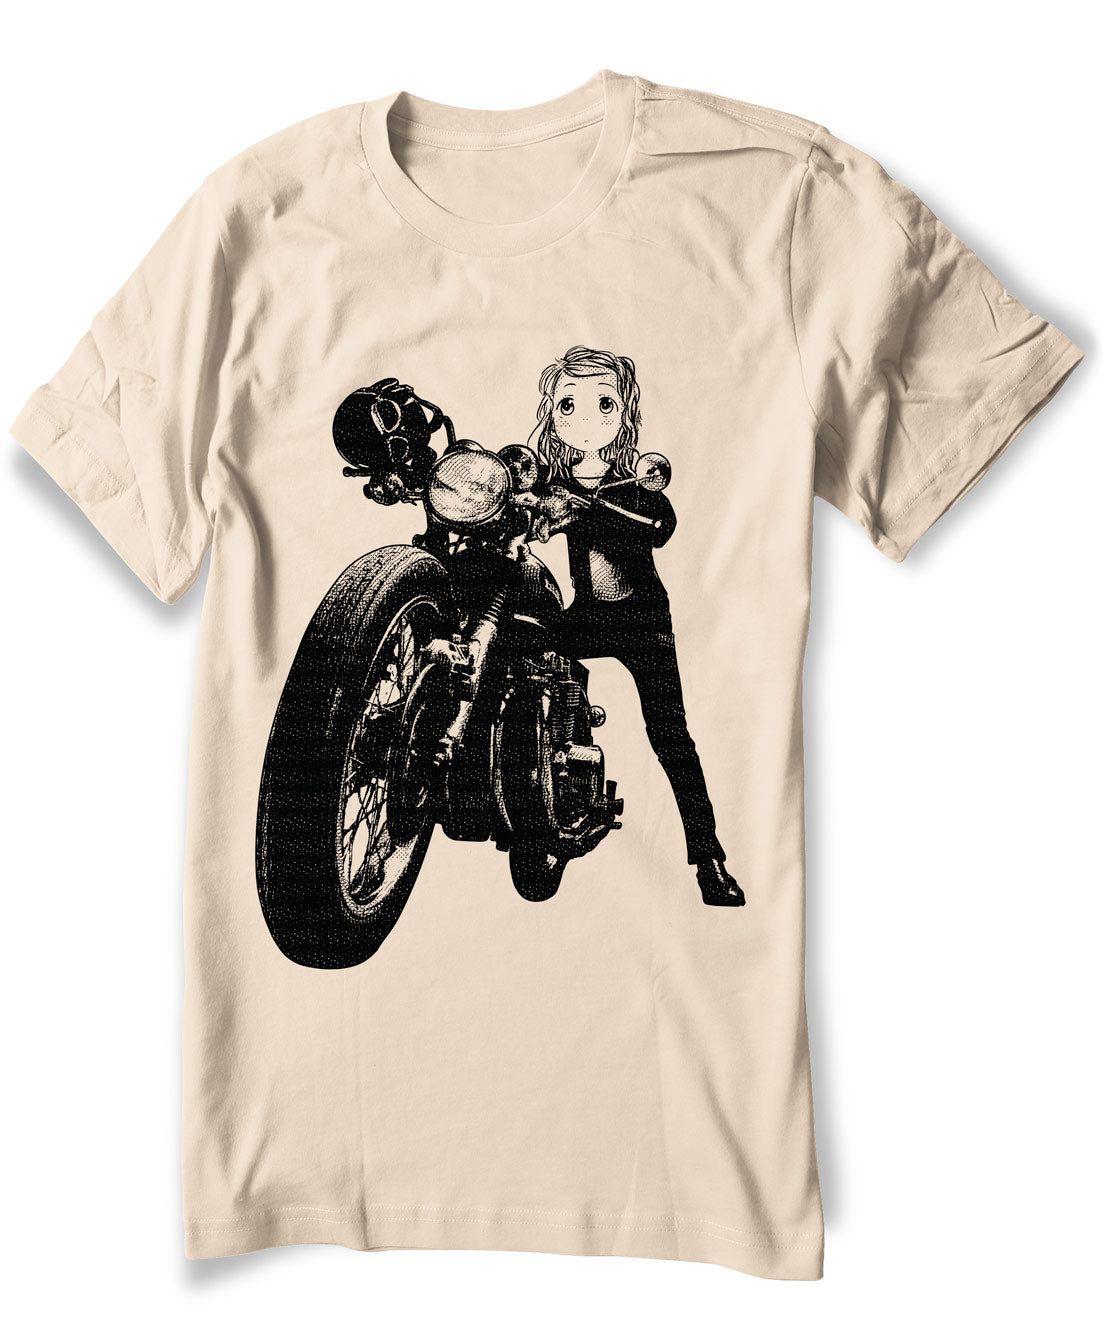 Anime Biker Girl Shirt